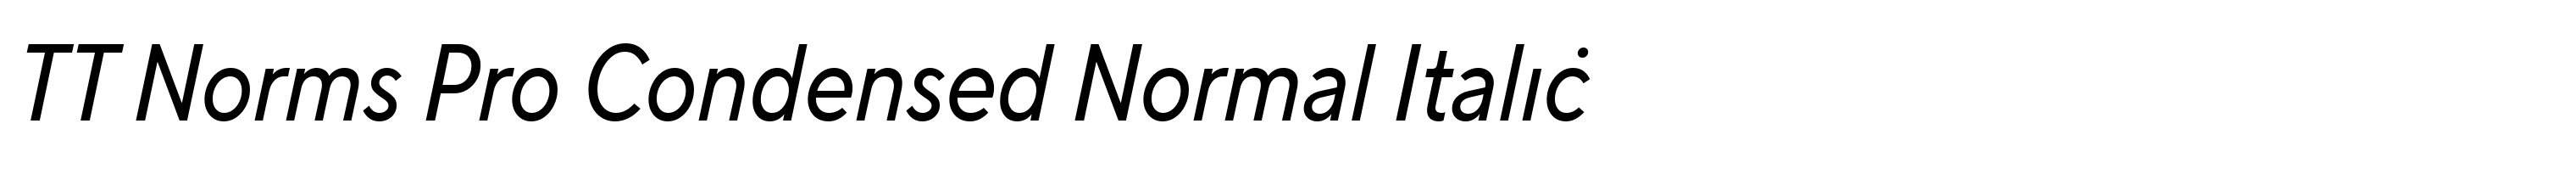 TT Norms Pro Condensed Normal Italic